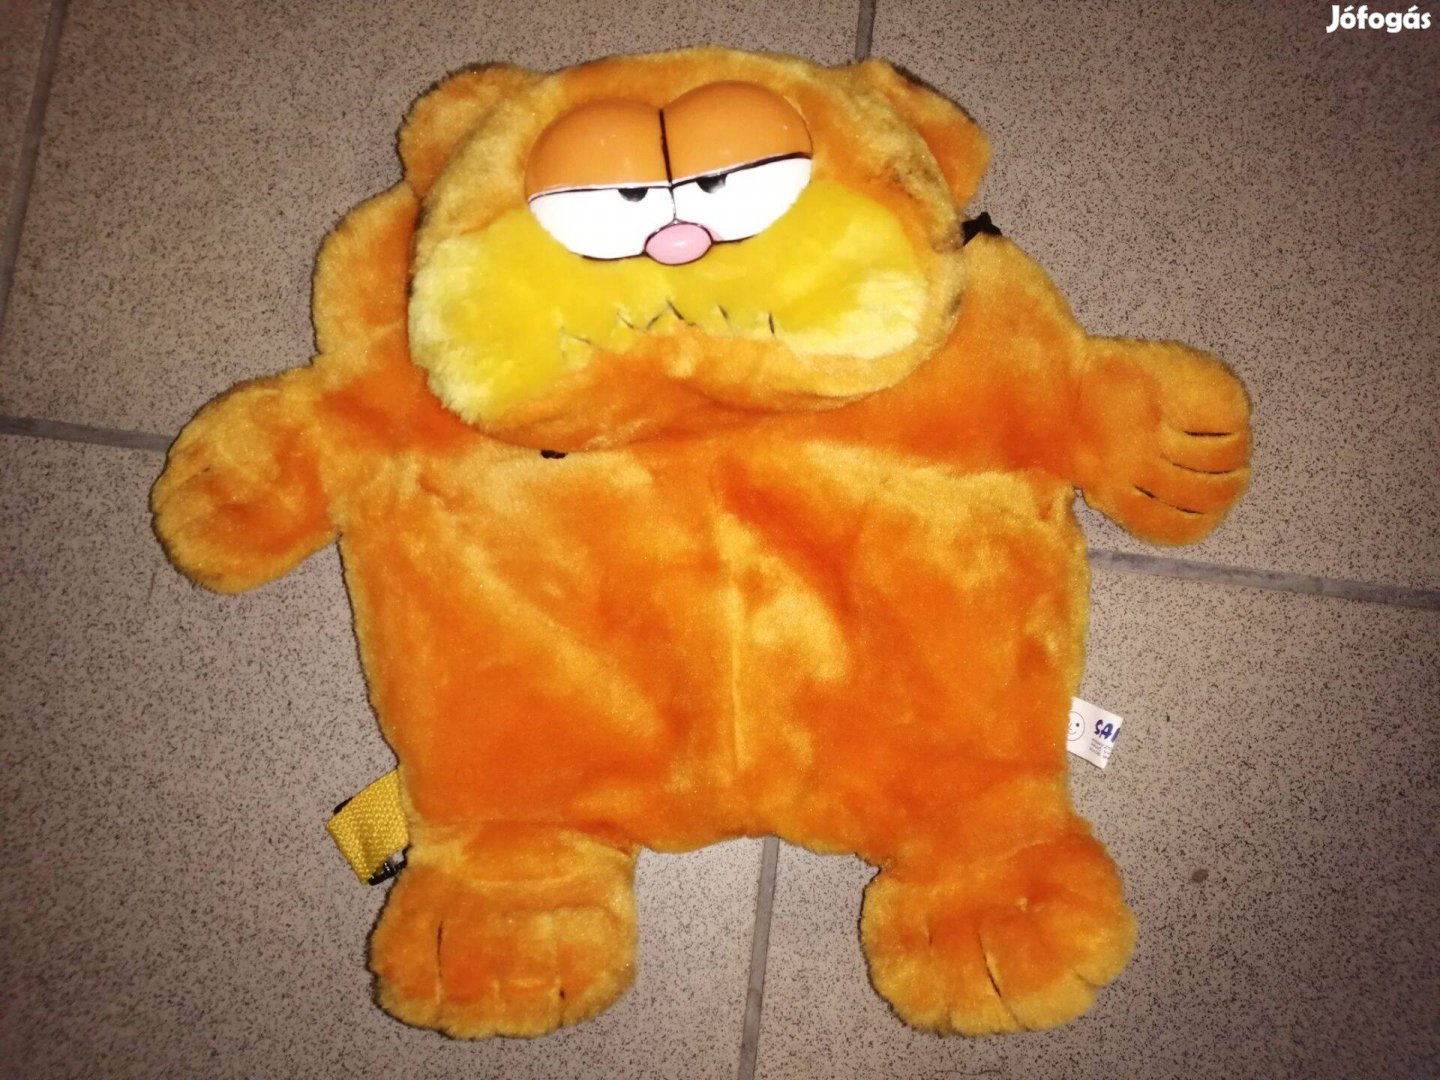 Garfield hátizsák